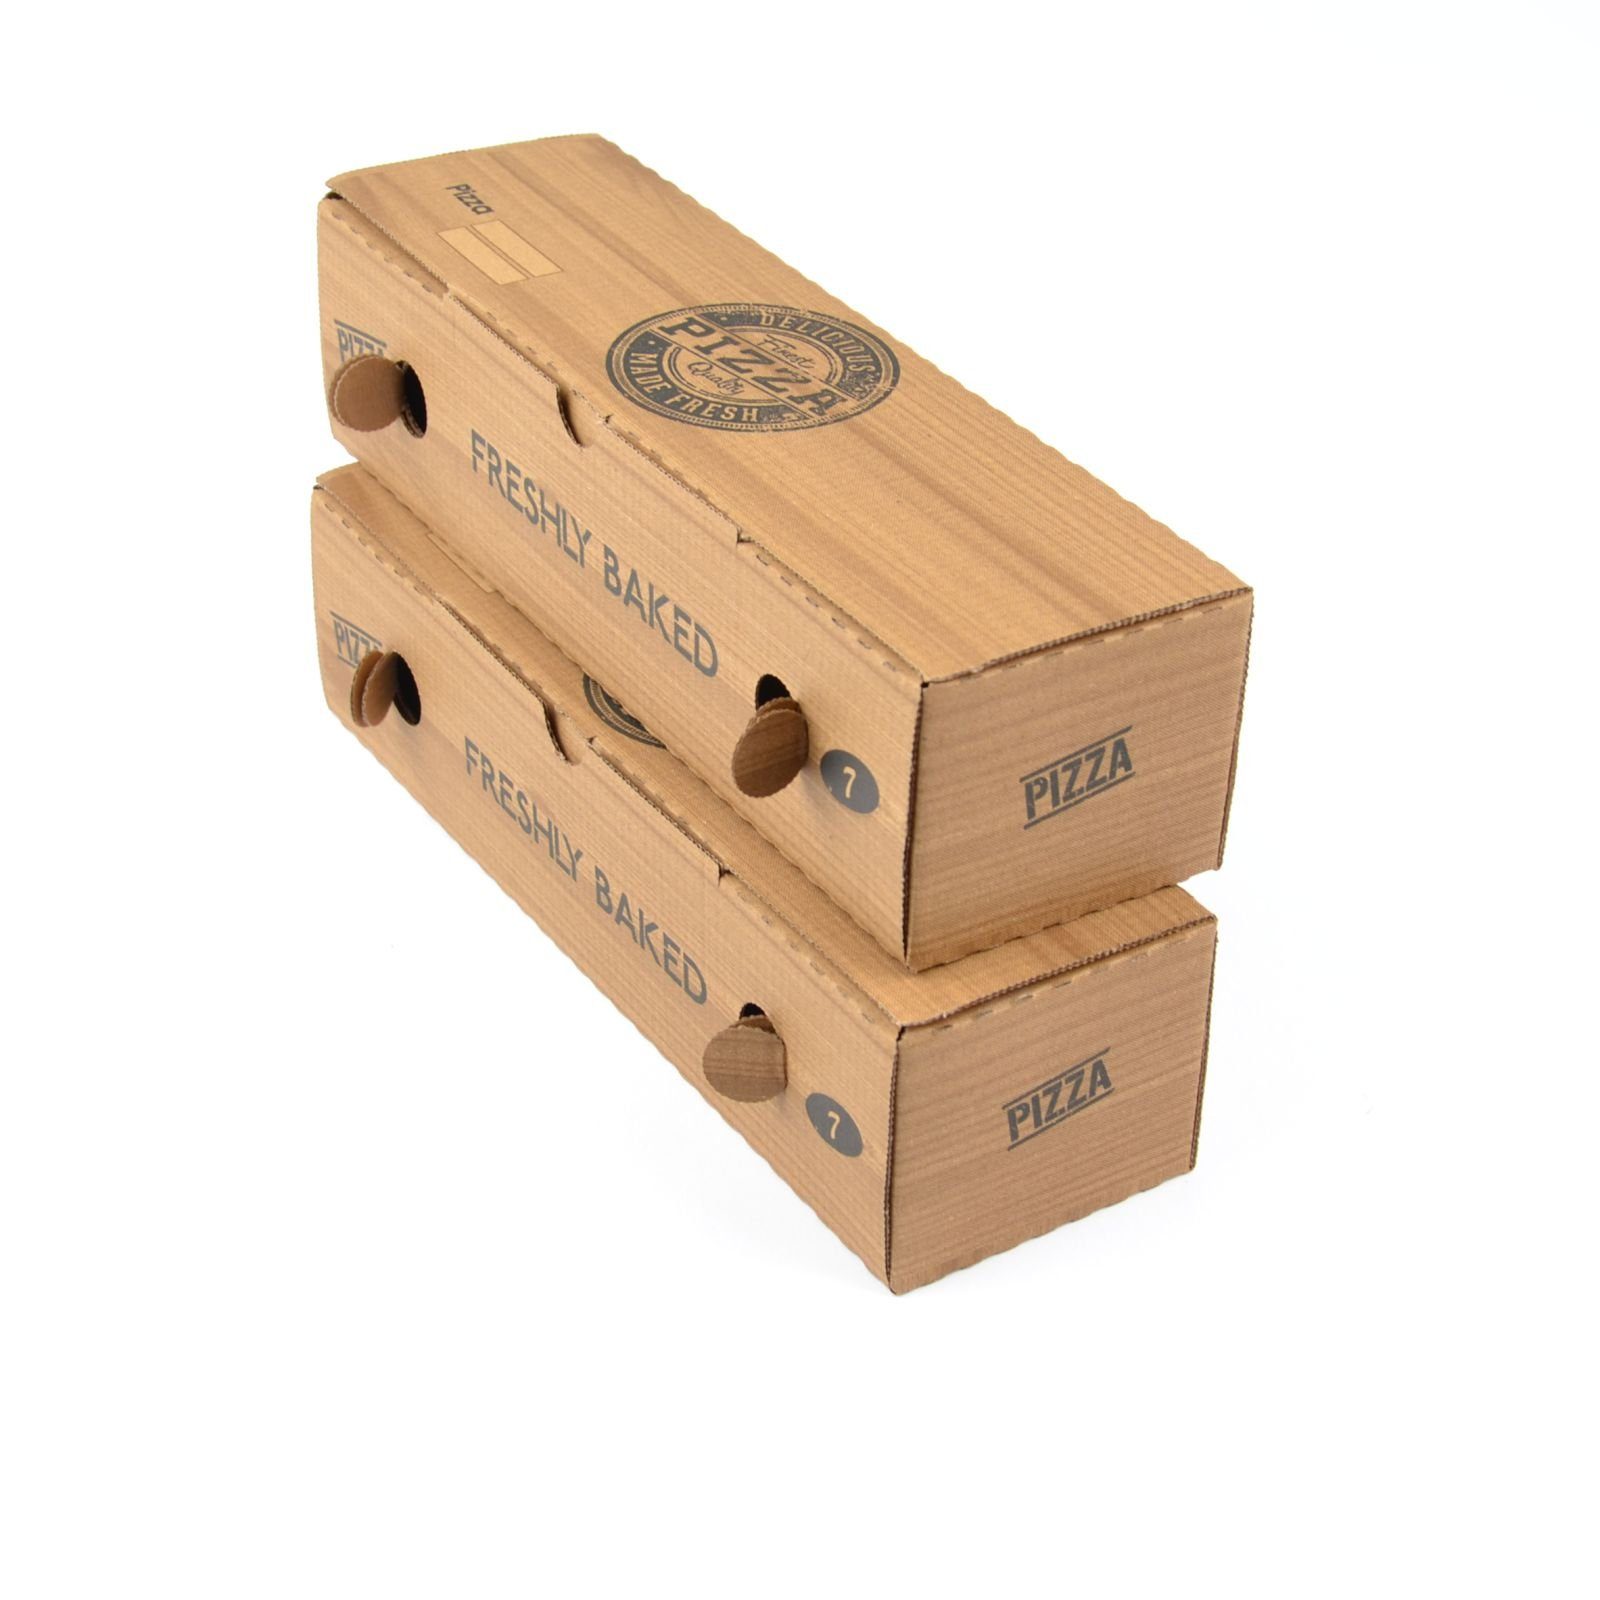 Box Pitabox cm) Pizza-Motiv Rollobox Lahmacun Dürümbox Pizzakartons, 100 "Rollo" Rollo Stück kraftbraun kraft, (7×8×28 Einwegschale Modell